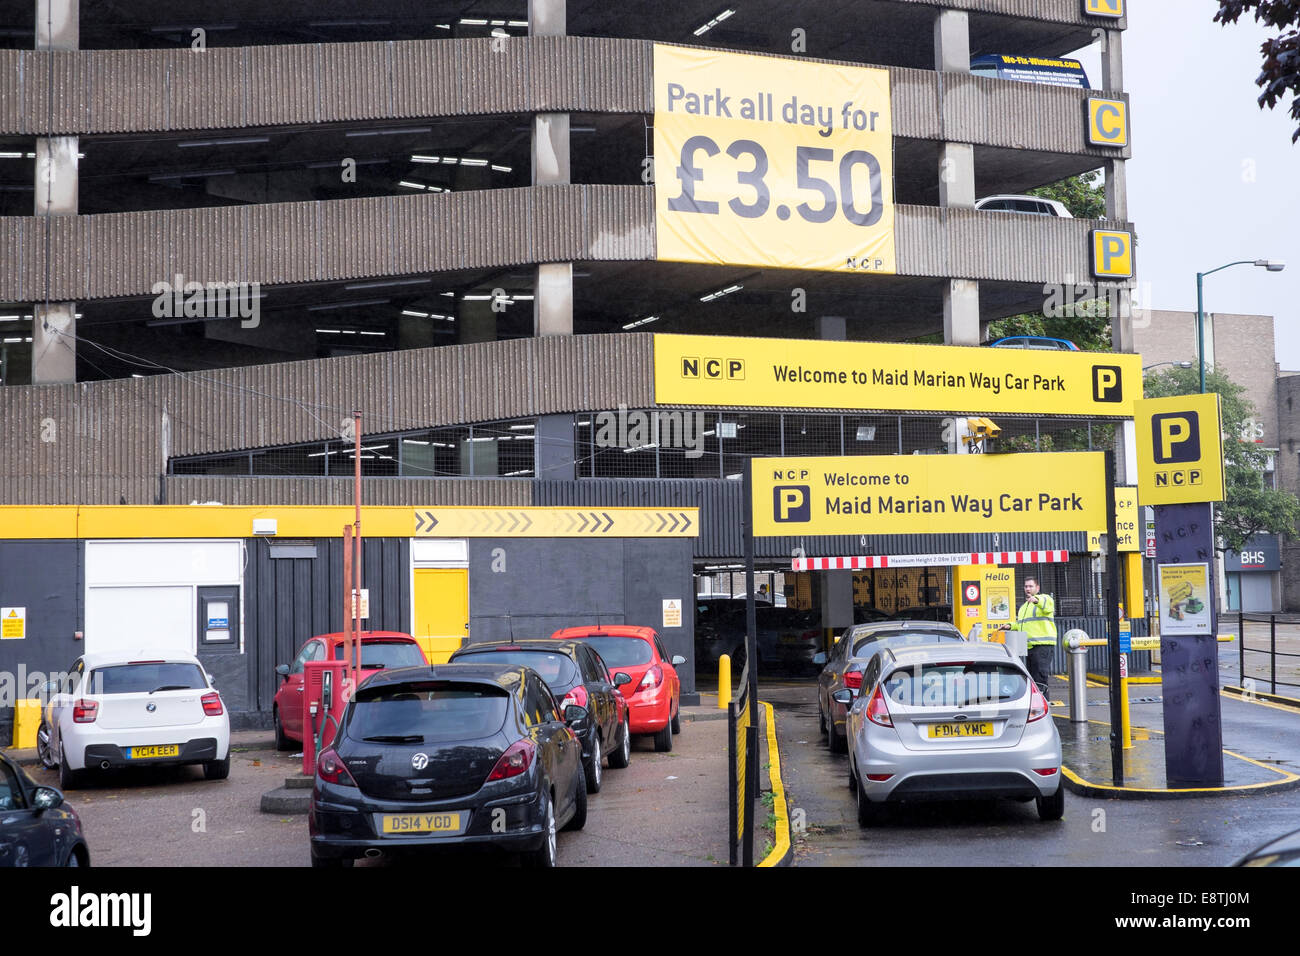 NCP Parkplatz alle Tag £3,50, Nottingham, UK. Stockfoto